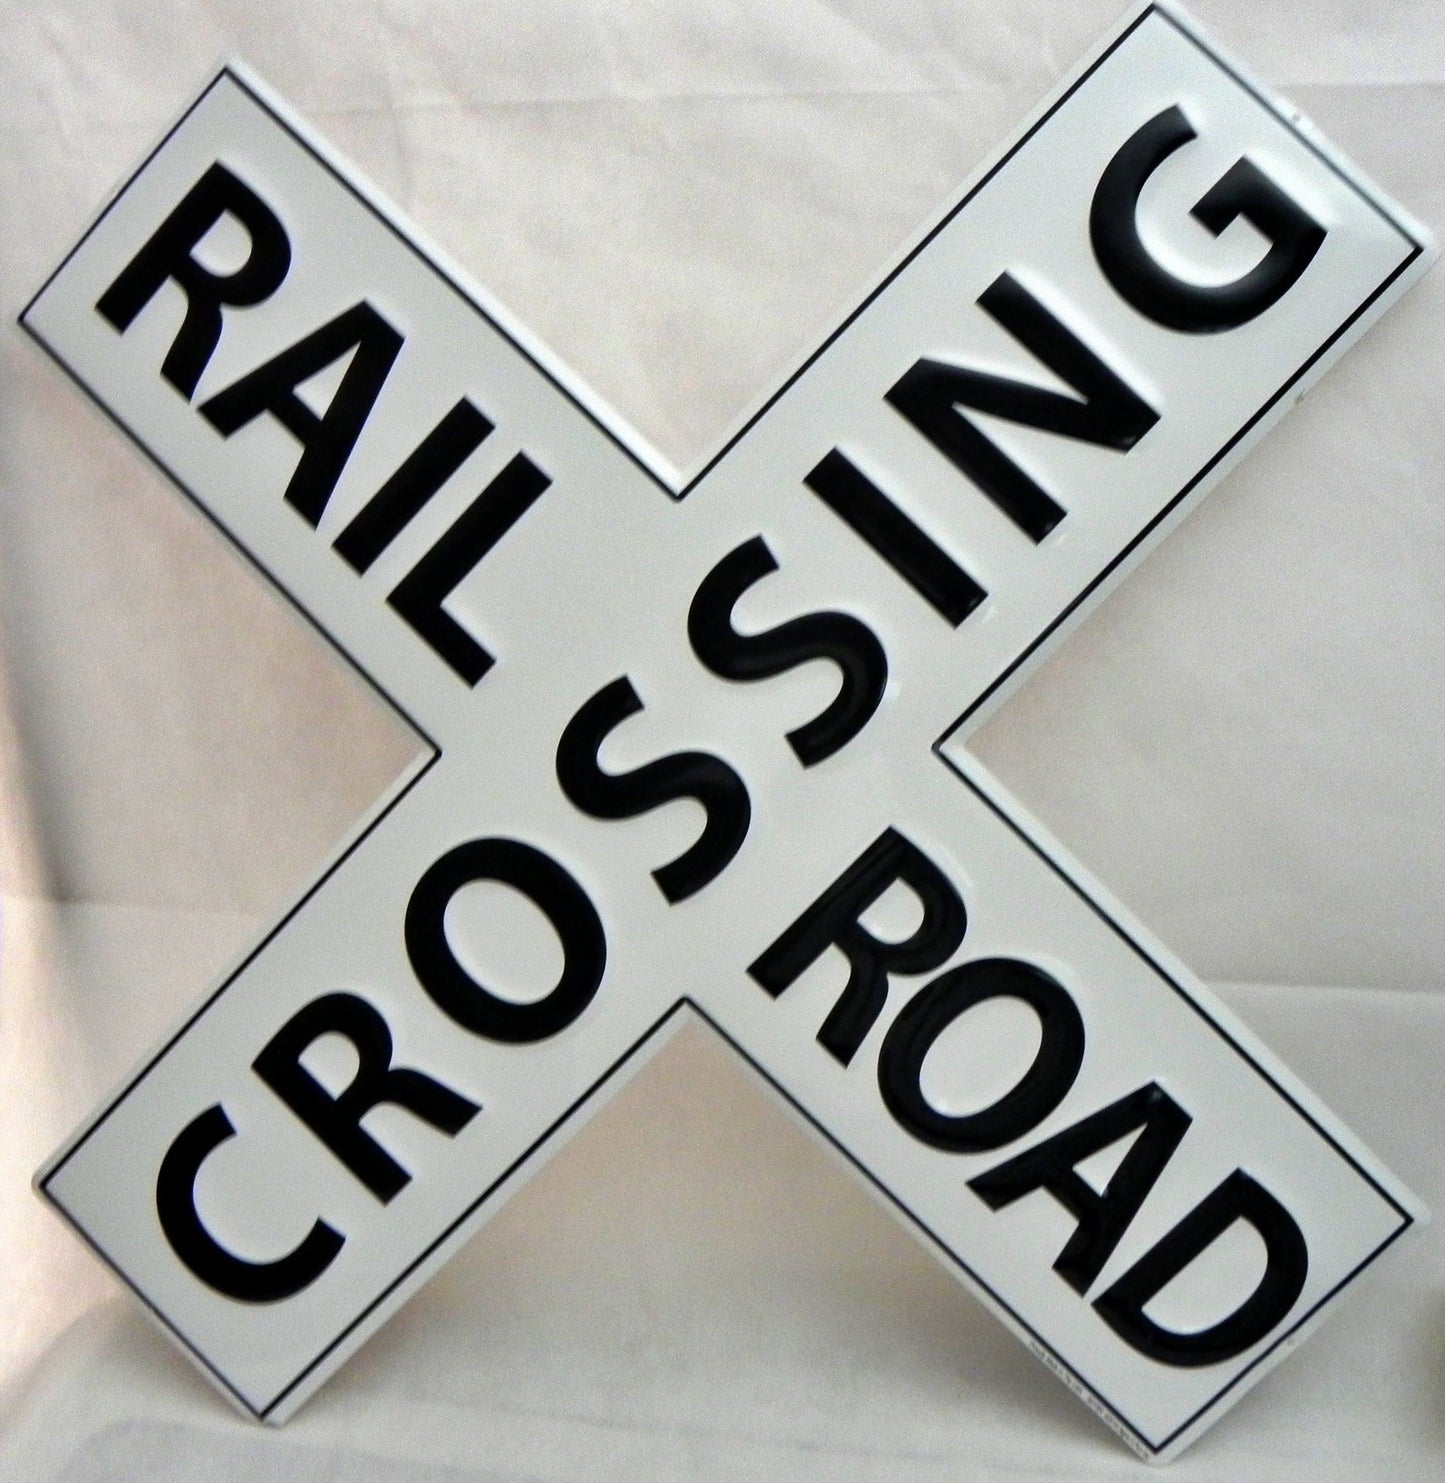  Railroad Crossing Sign  24 inch